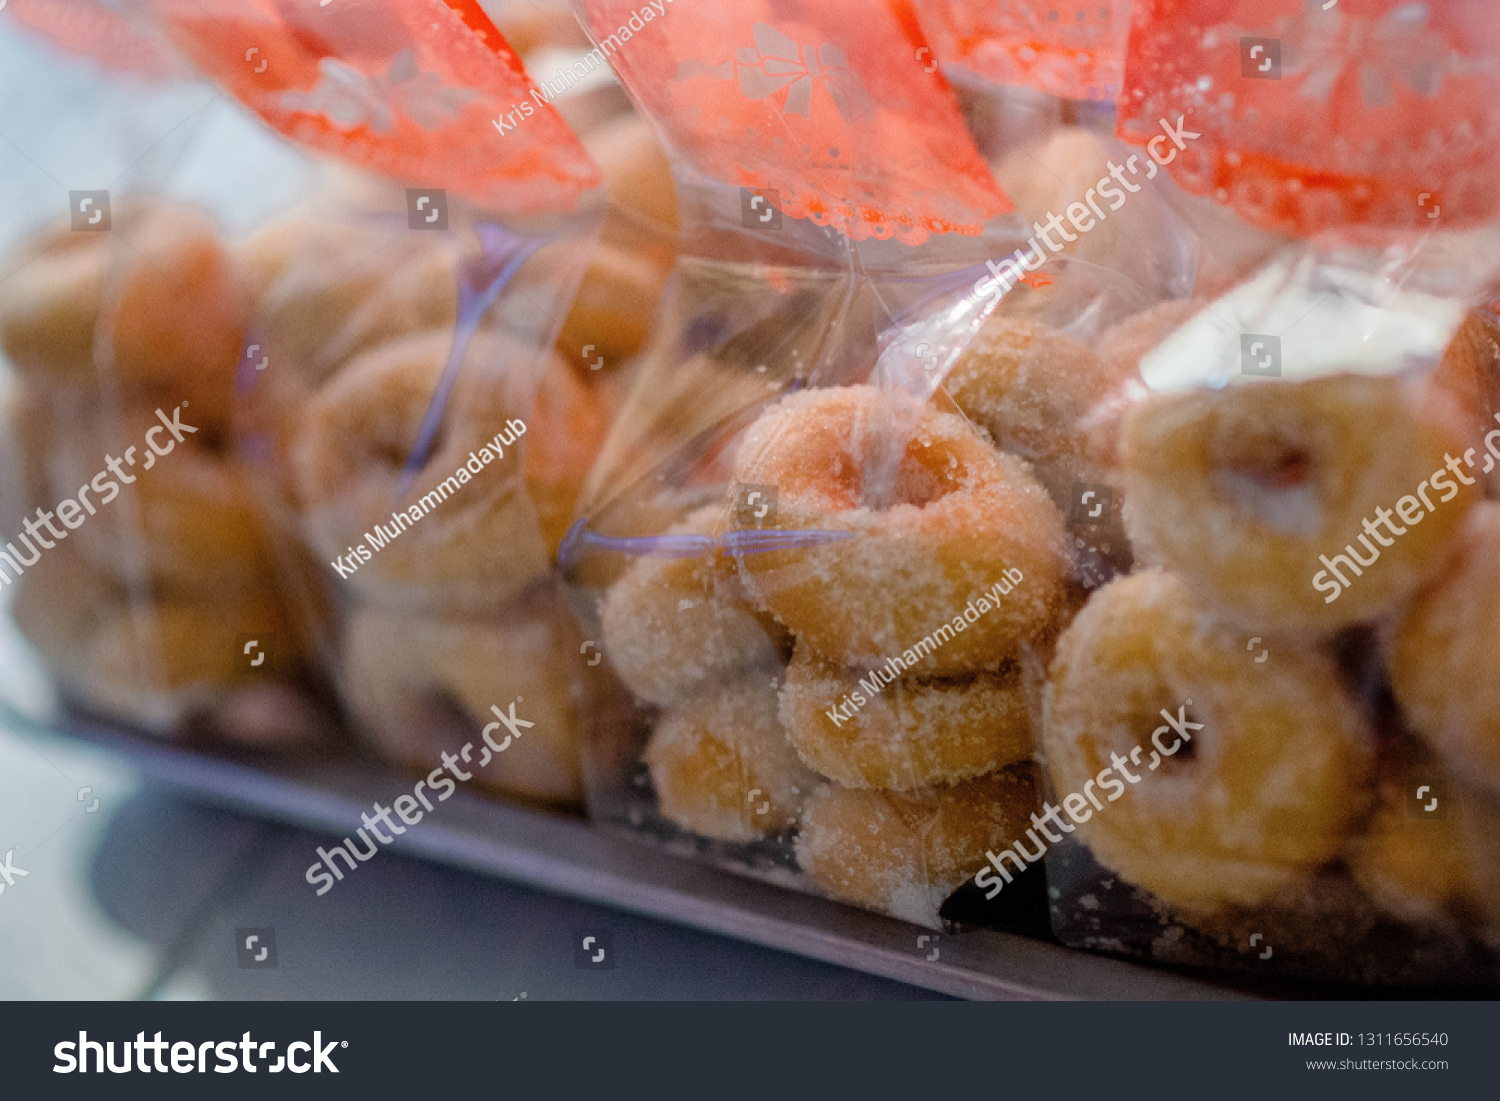 Download Cake Doughnut Sugar Plastic Packaging Bag Food And Drink Stock Image 1311656540 Yellowimages Mockups